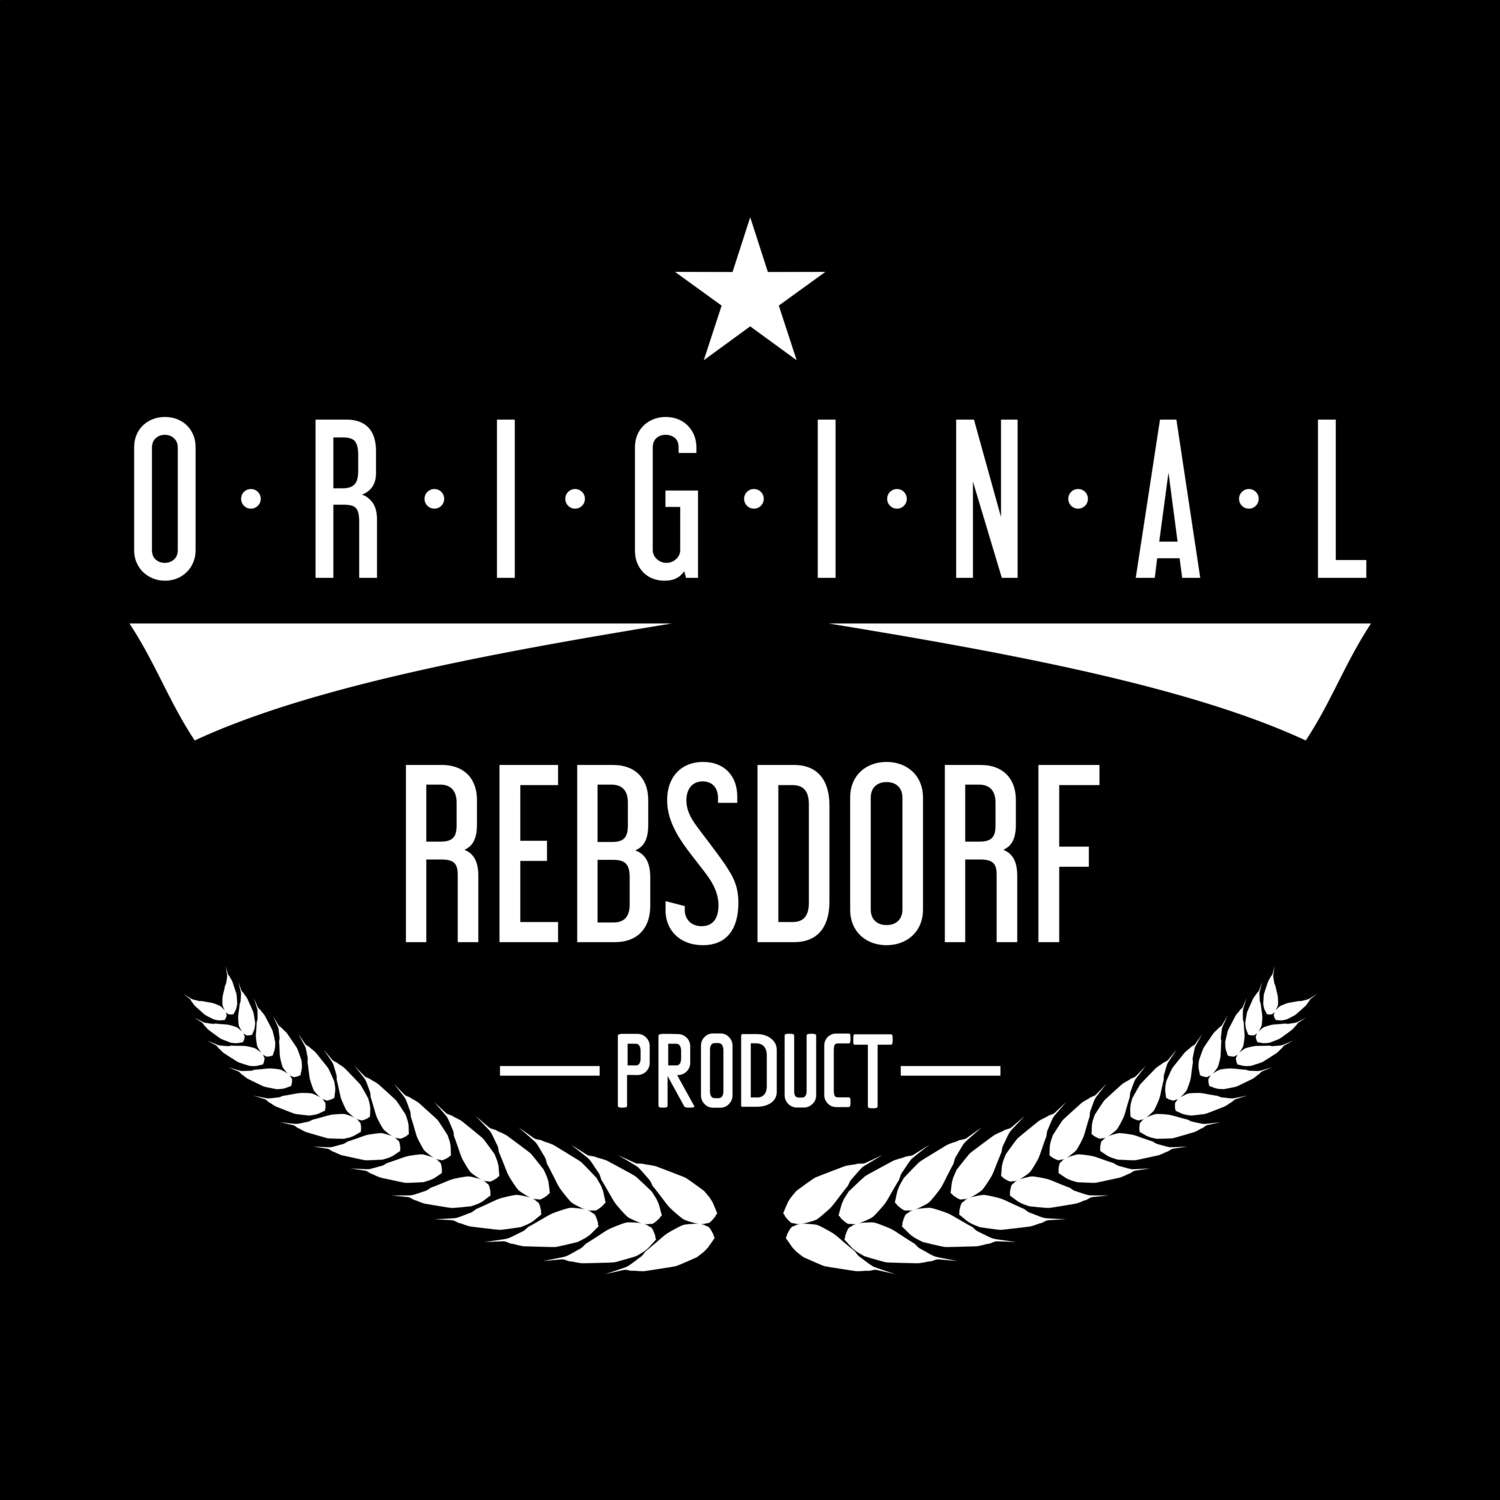 Rebsdorf T-Shirt »Original Product«